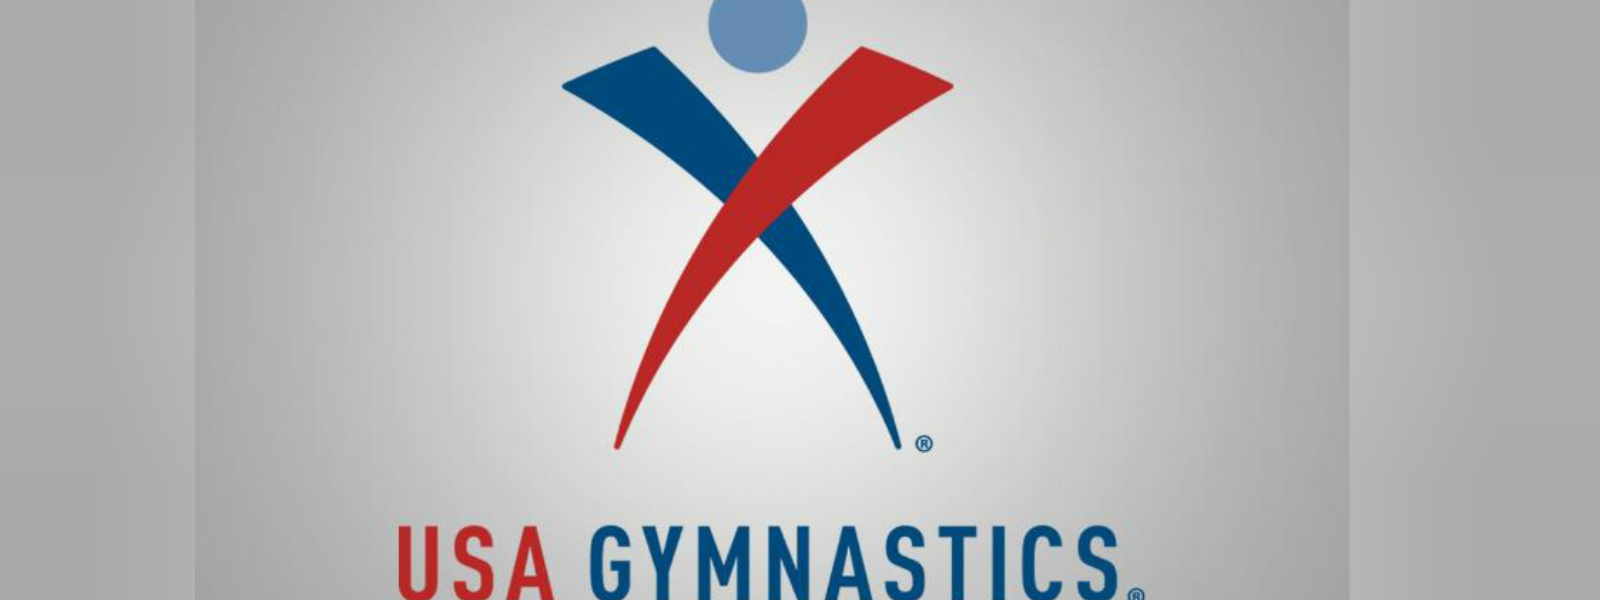 USOC to shut down USA Gymnastics after scandal 